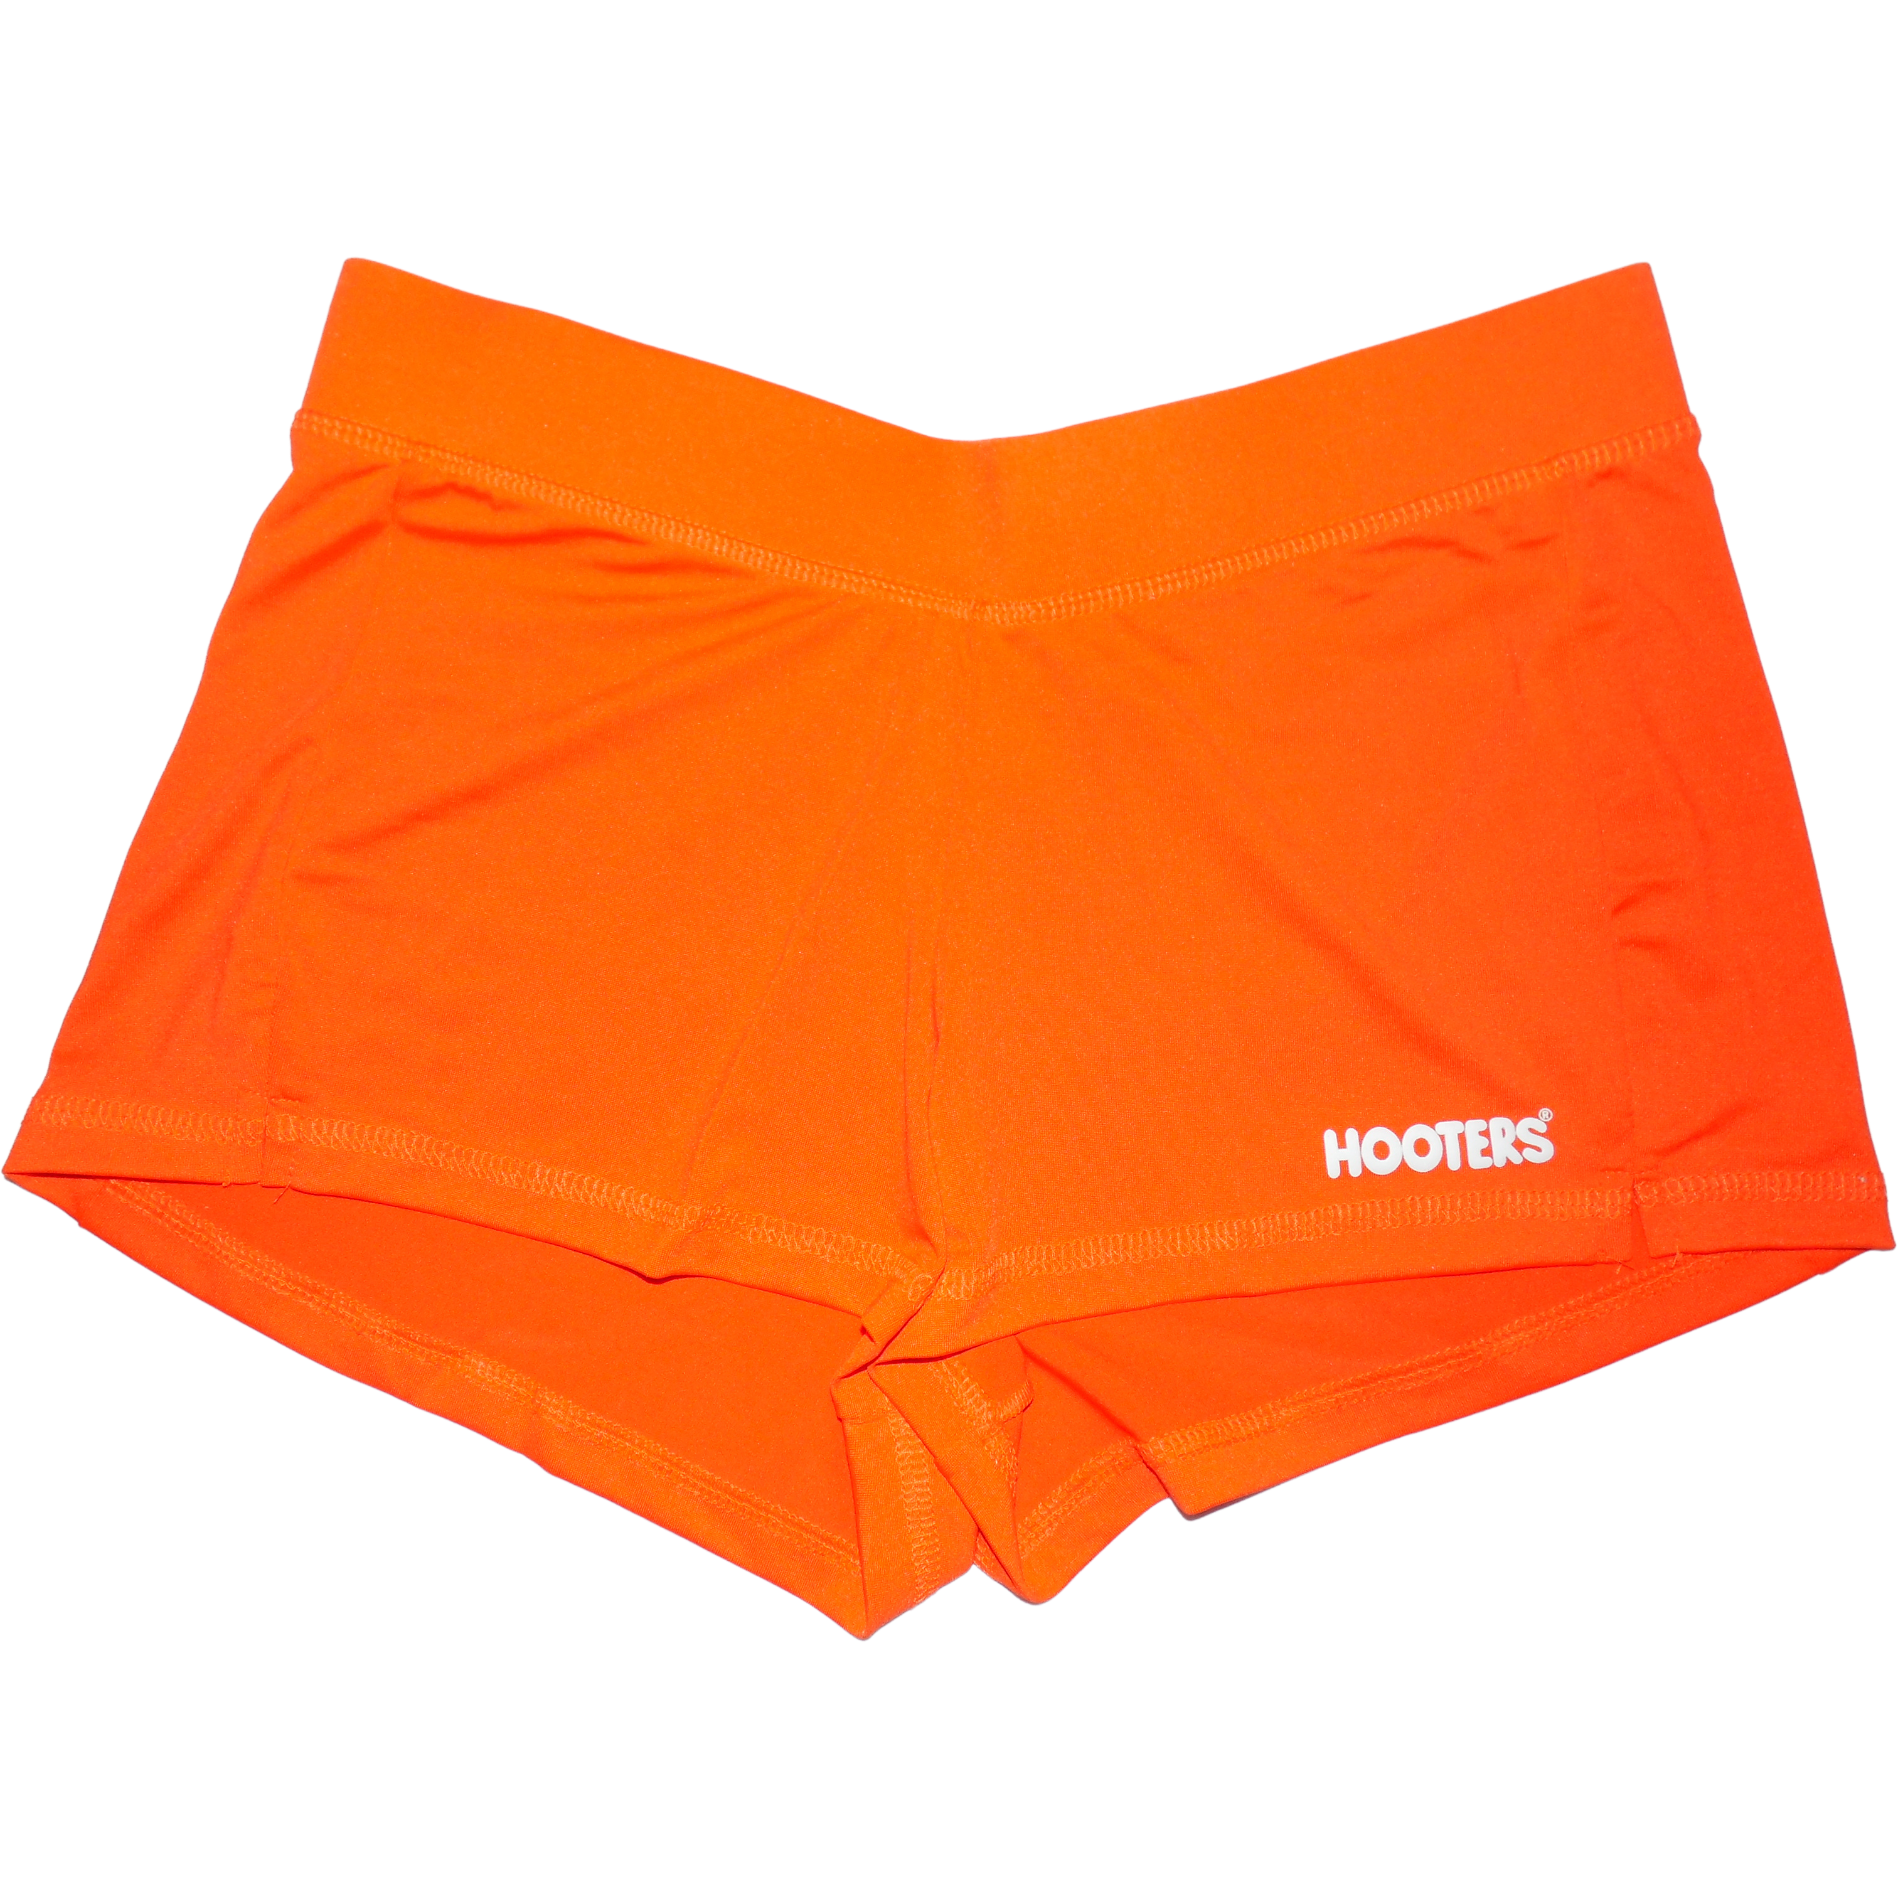 Hooters Orange Uniform Outfit Costume Shorts - Hootrsnhose